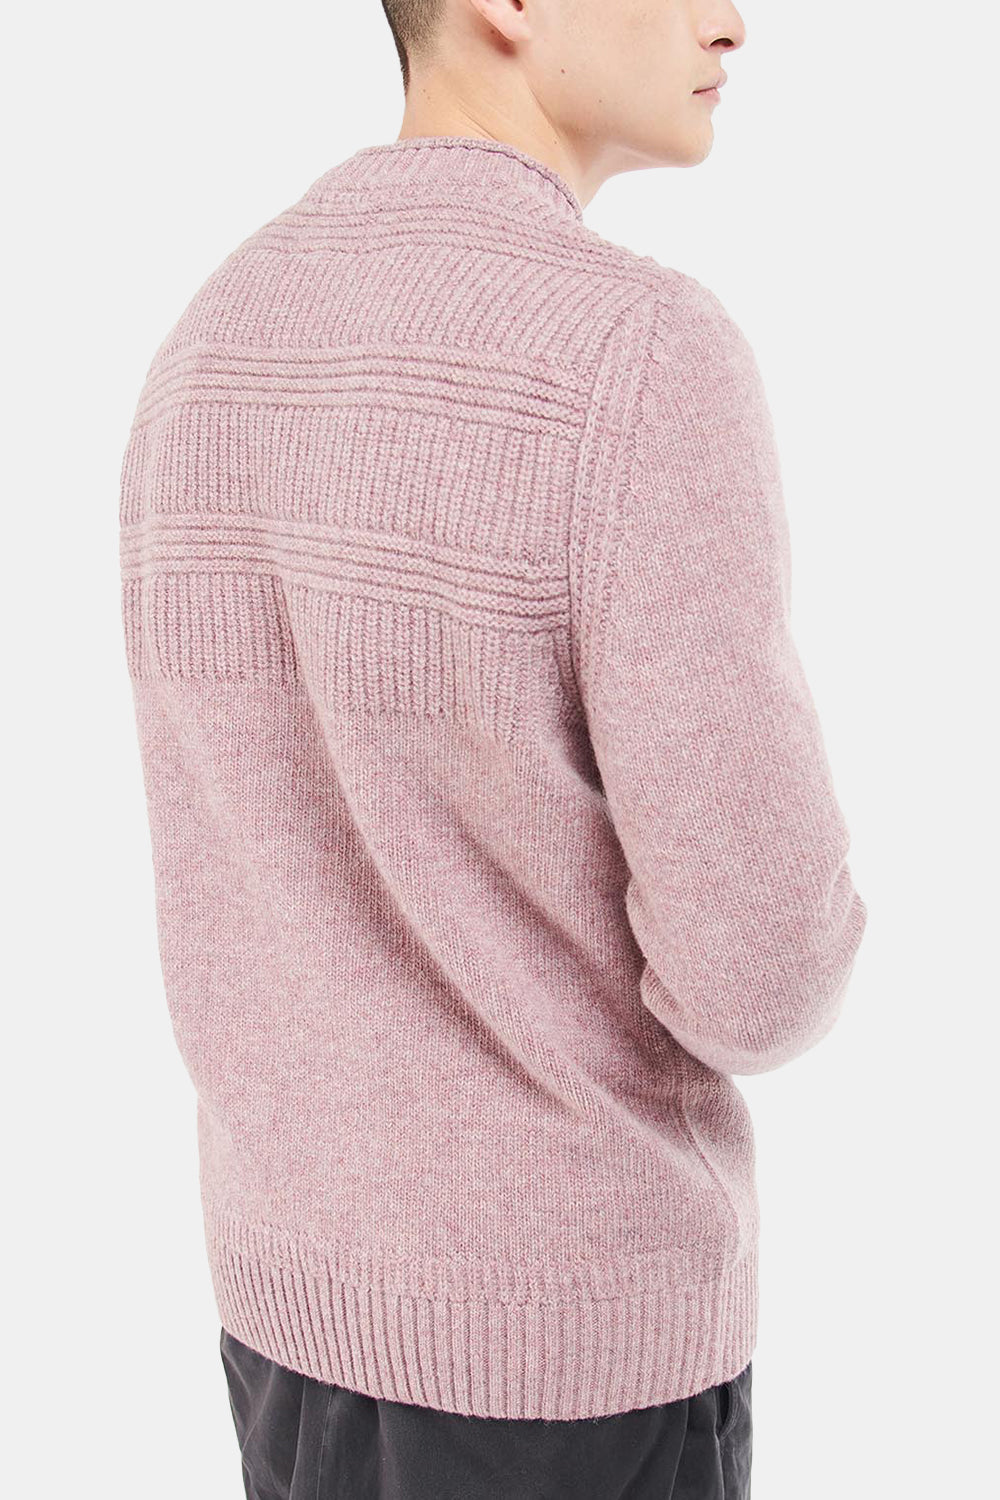 Barbour White Label Amherst Crew Sweatshirt (Pink Cinder) | Number Six